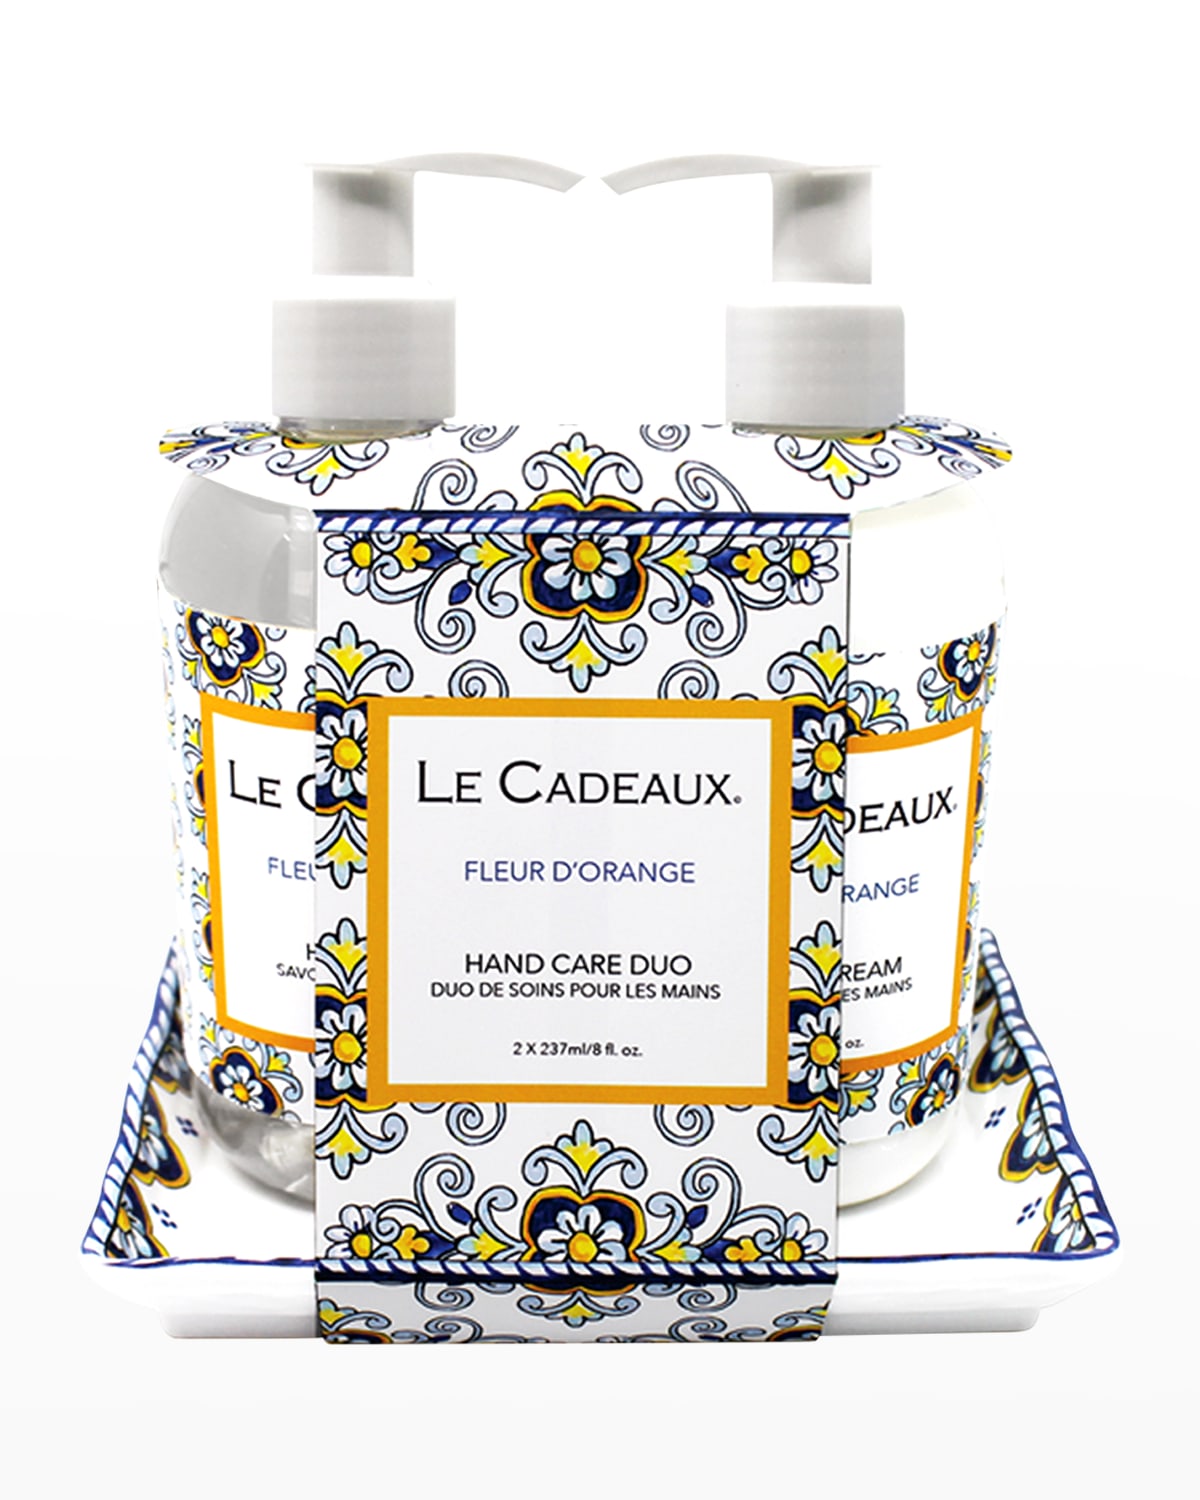 Le Cadeaux Hand Wash And Hand Cream Gift Set In Fleur D' Orange